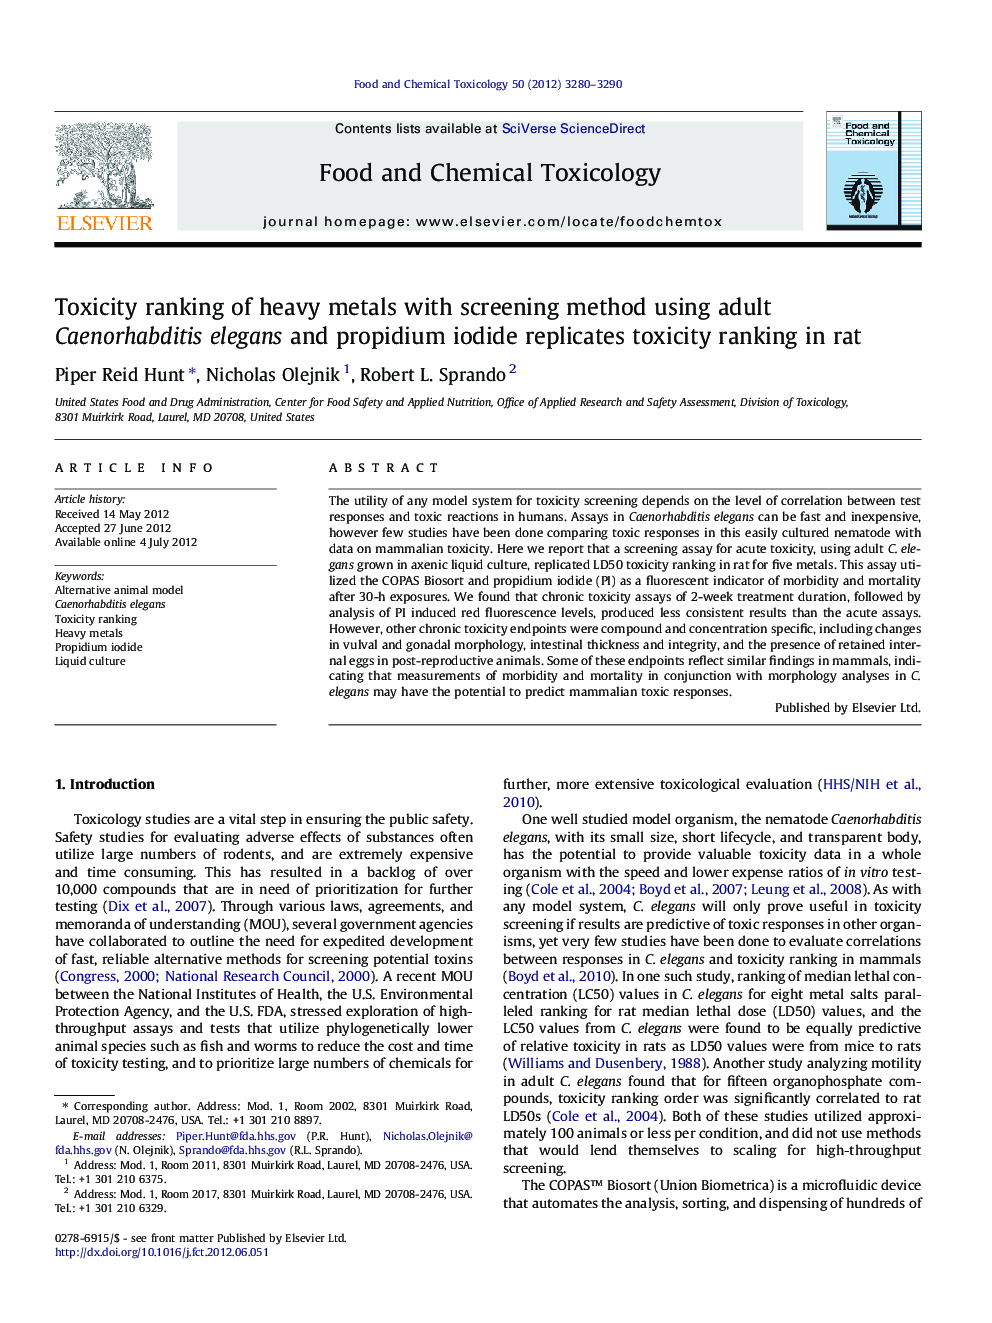 Toxicity ranking of heavy metals with screening method using adult Caenorhabditis elegans and propidium iodide replicates toxicity ranking in rat